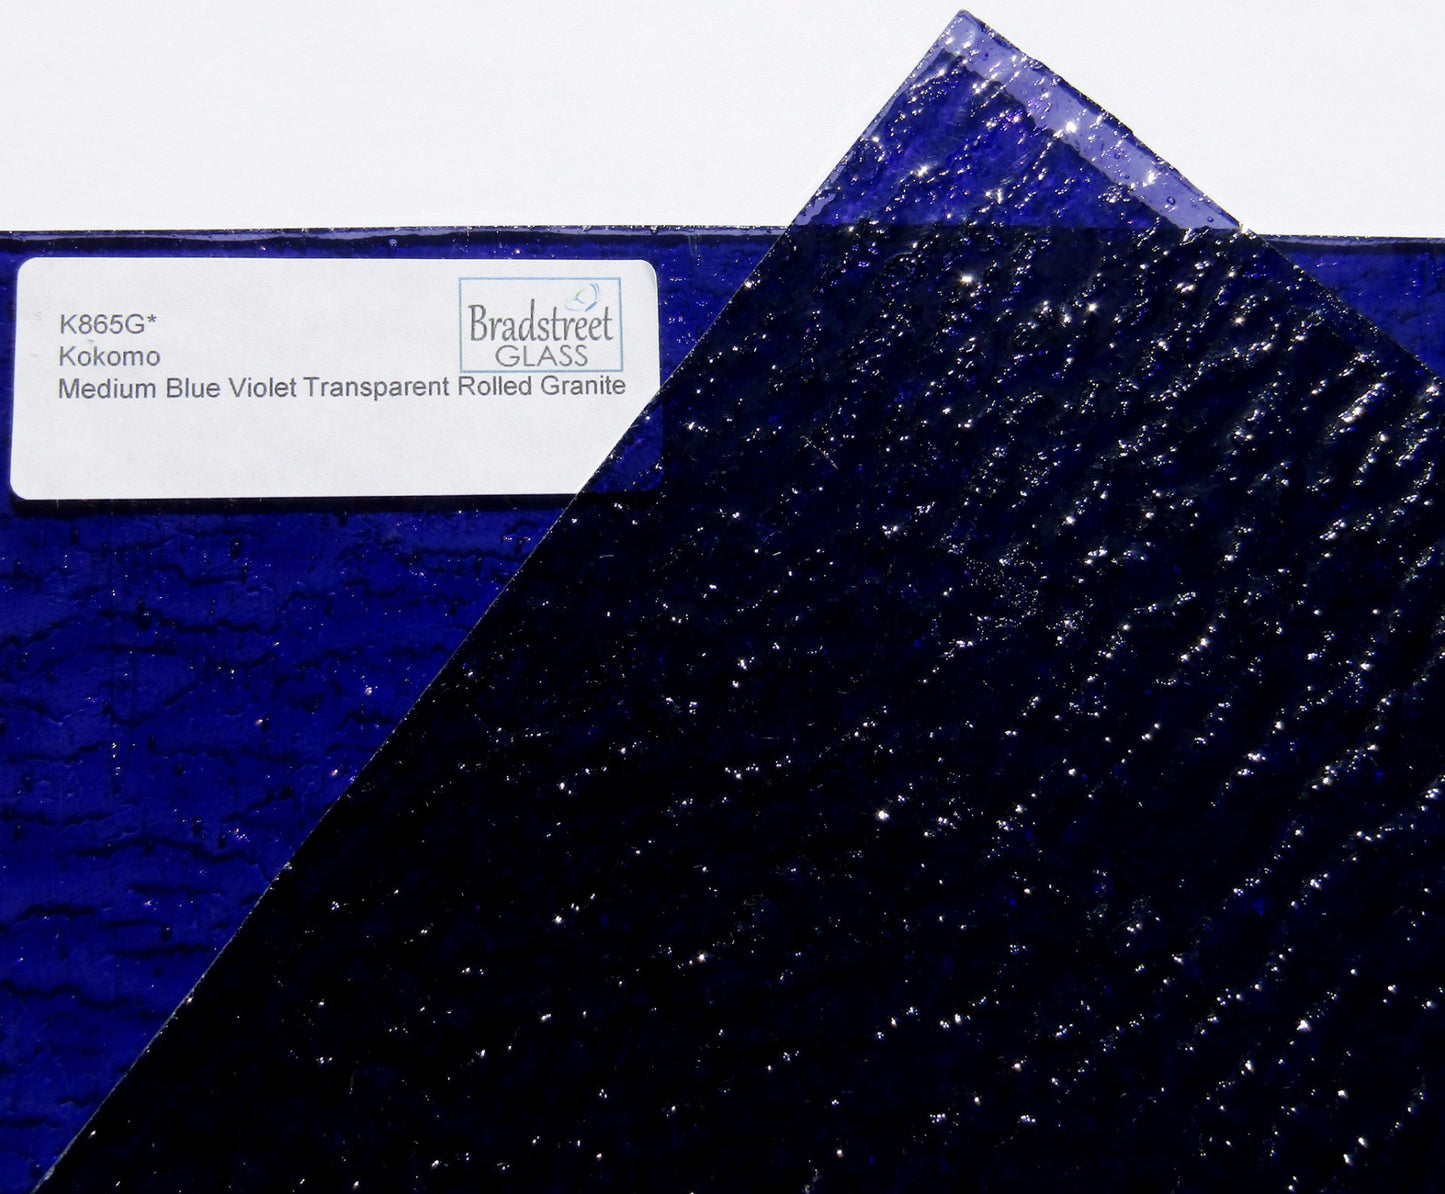 Kokomo 865G Medium Blue Violet Transparent Rolled Granite Stained Glass Sheet